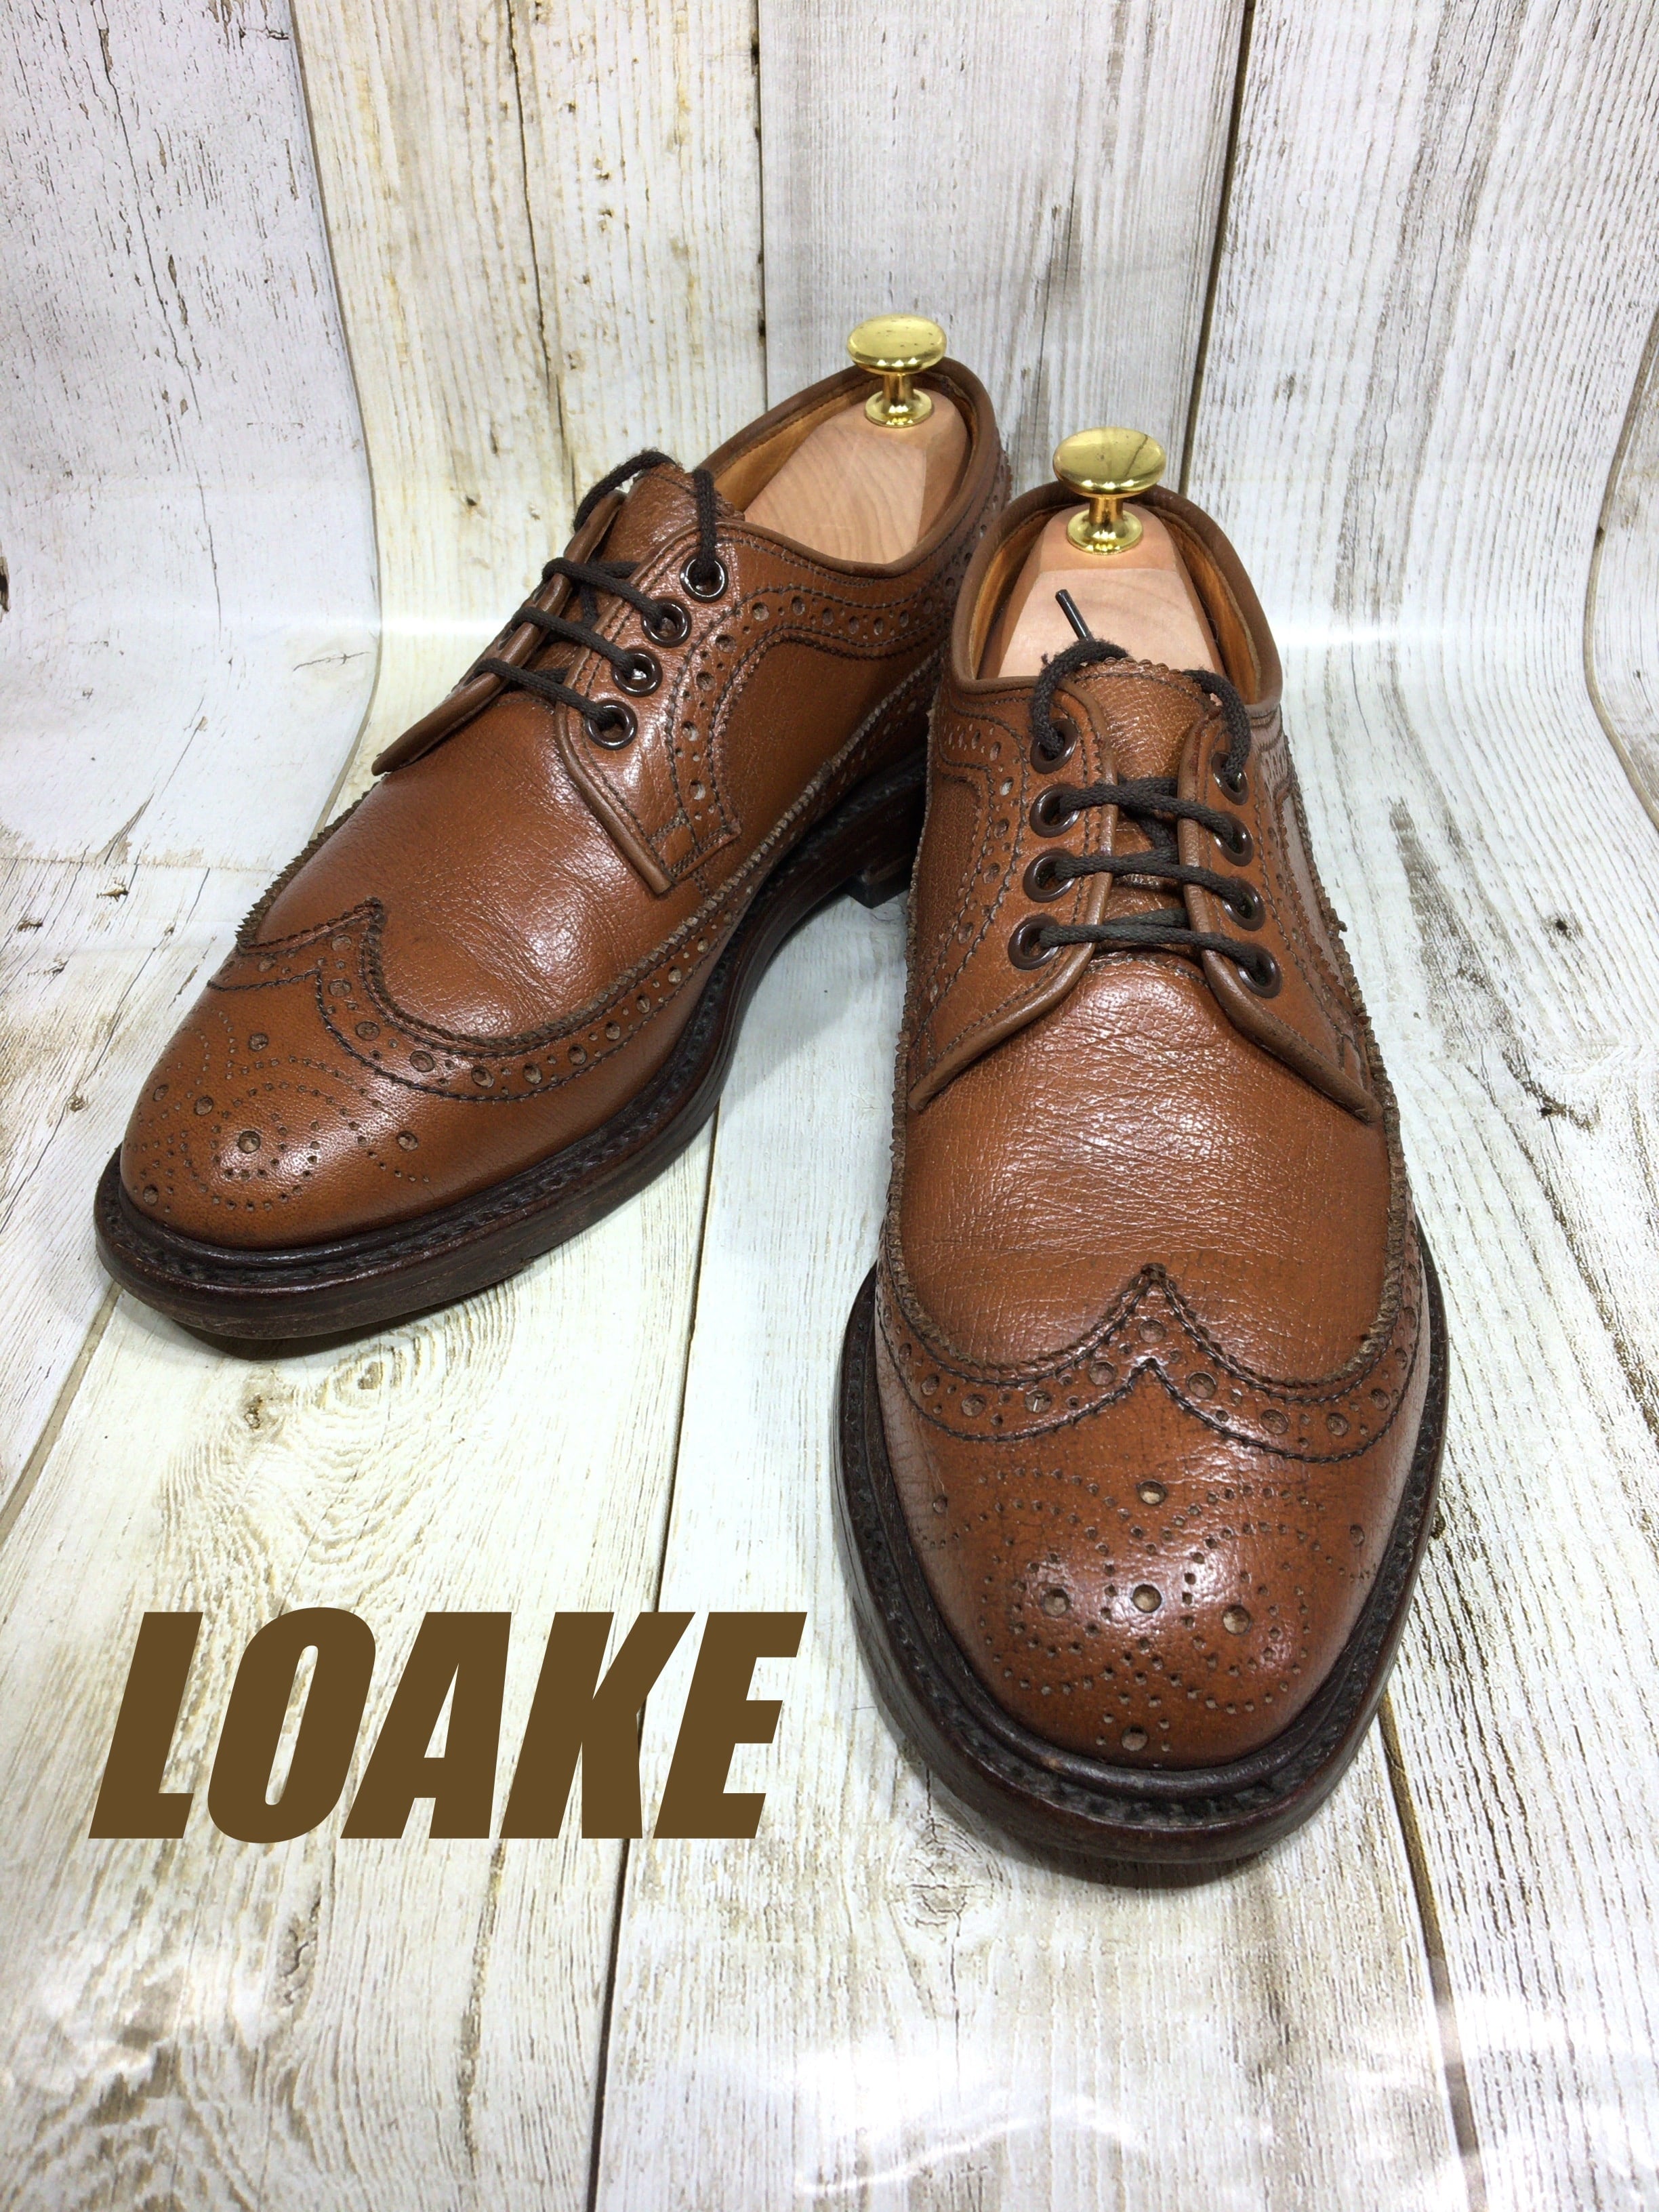 LOAKE ローク フルブローグ UK5H 24cm | 中古靴・革靴・ブーツ通販専門店 DafsMart ダフスマート Online Shop  powered by BASE